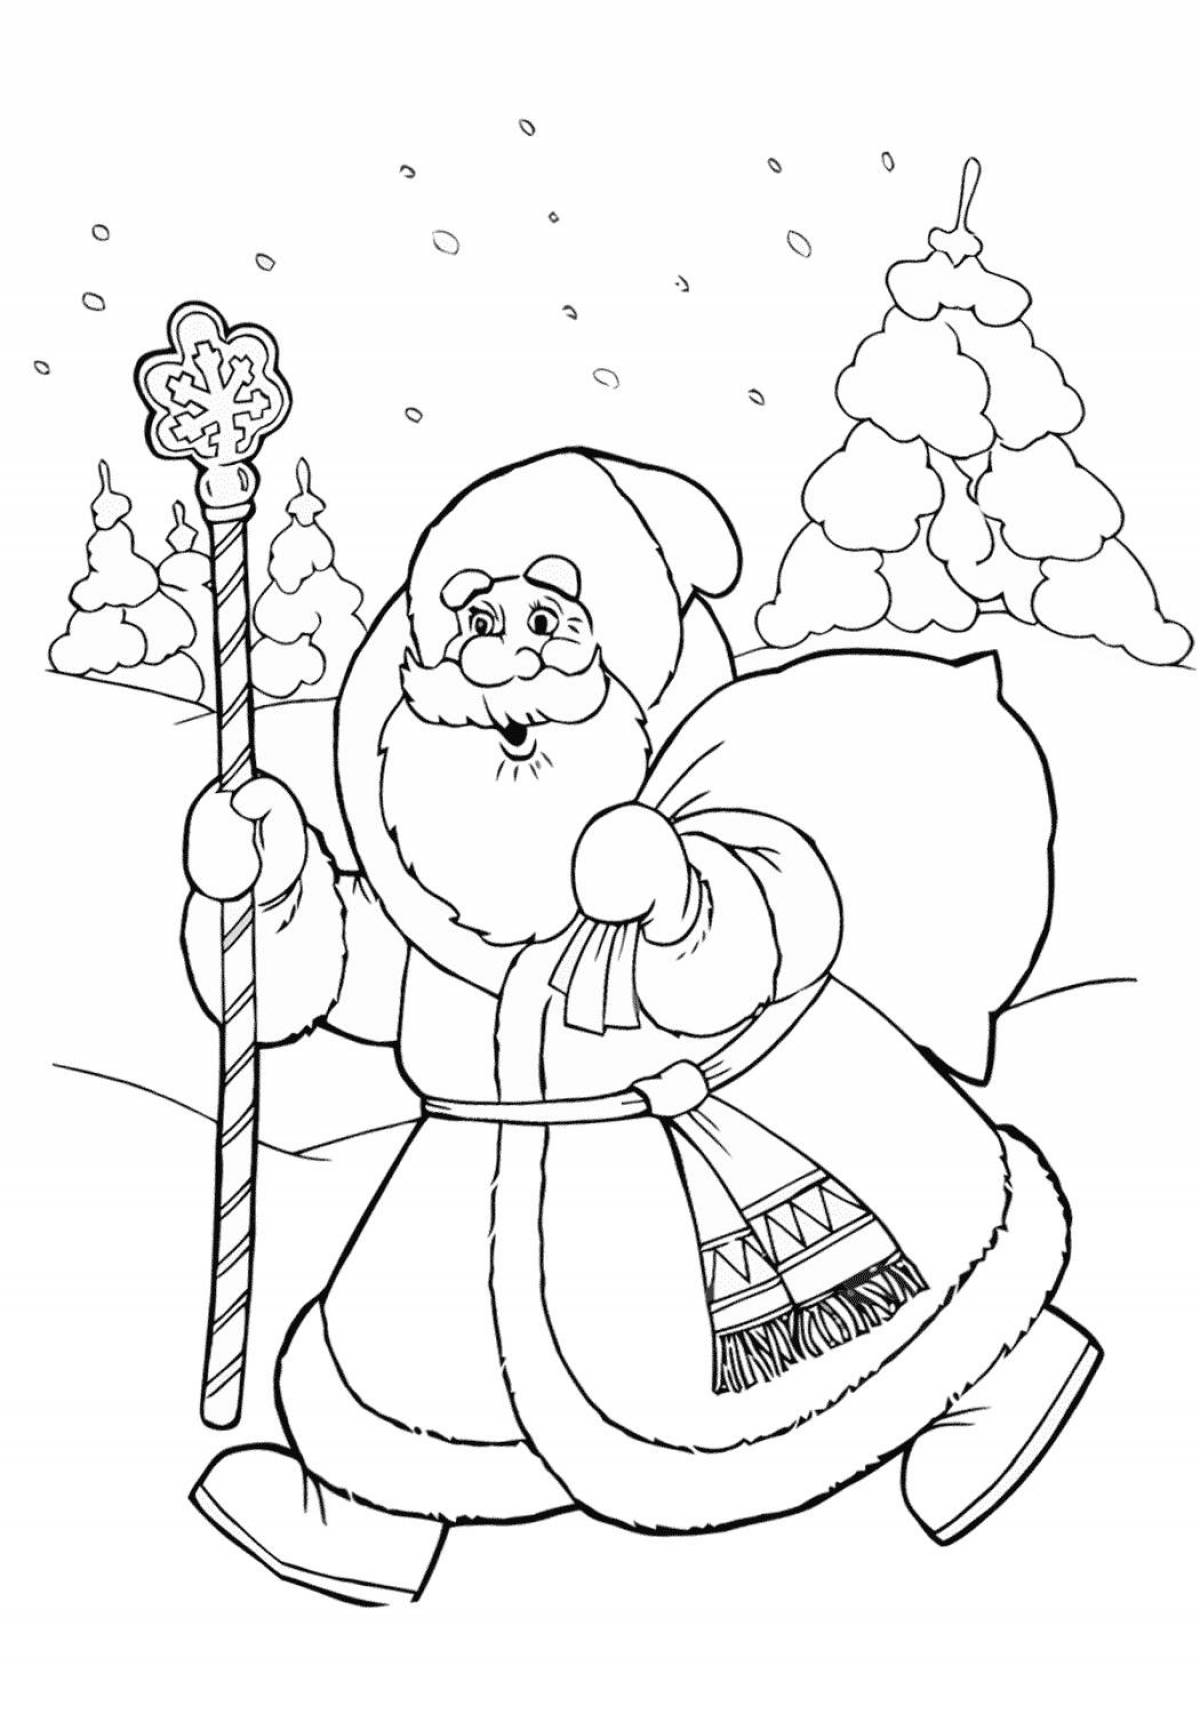 Fancy Santa Claus coloring page